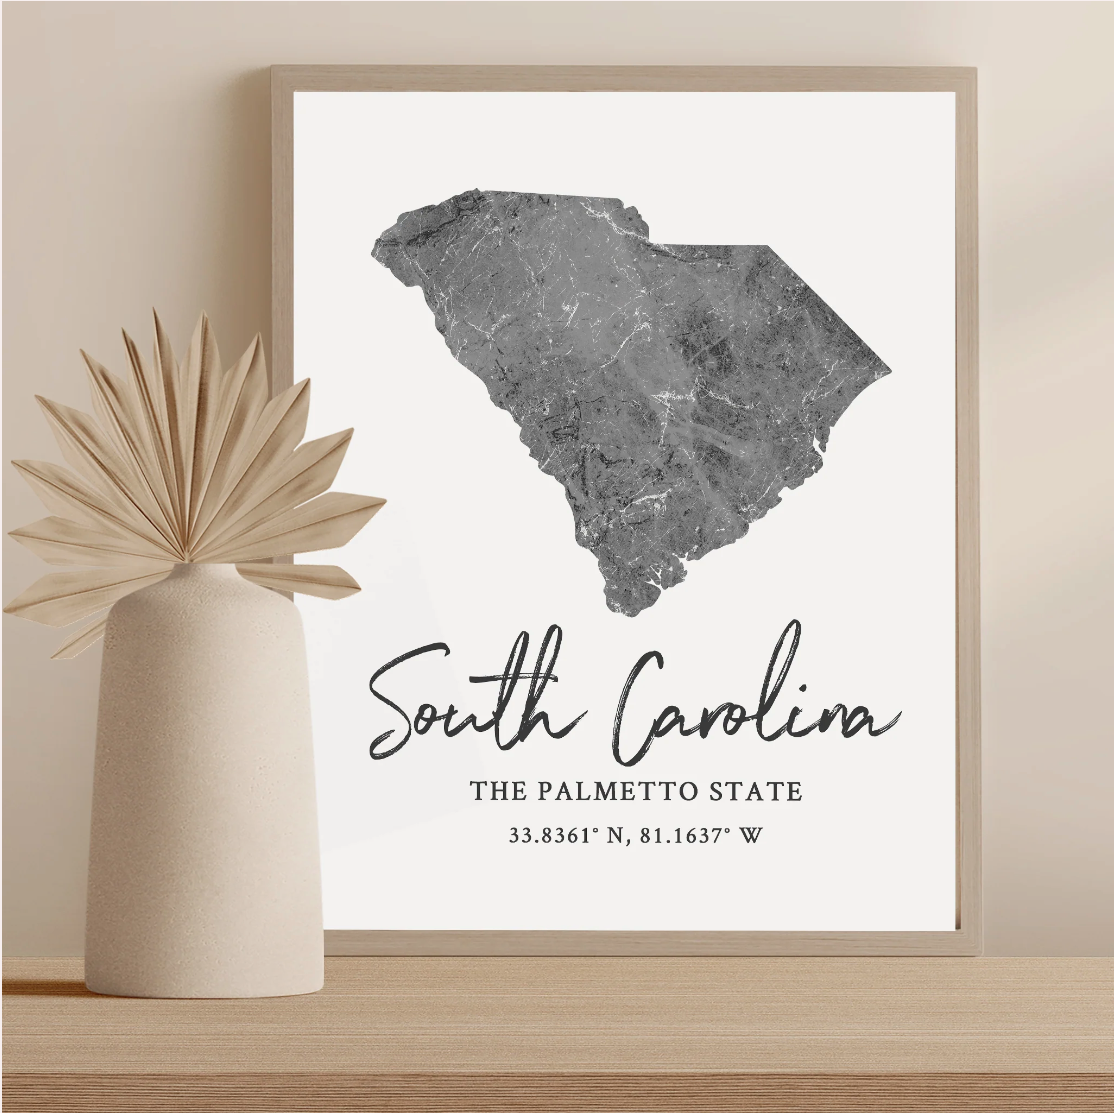 South Carolina State Map Silhouette print